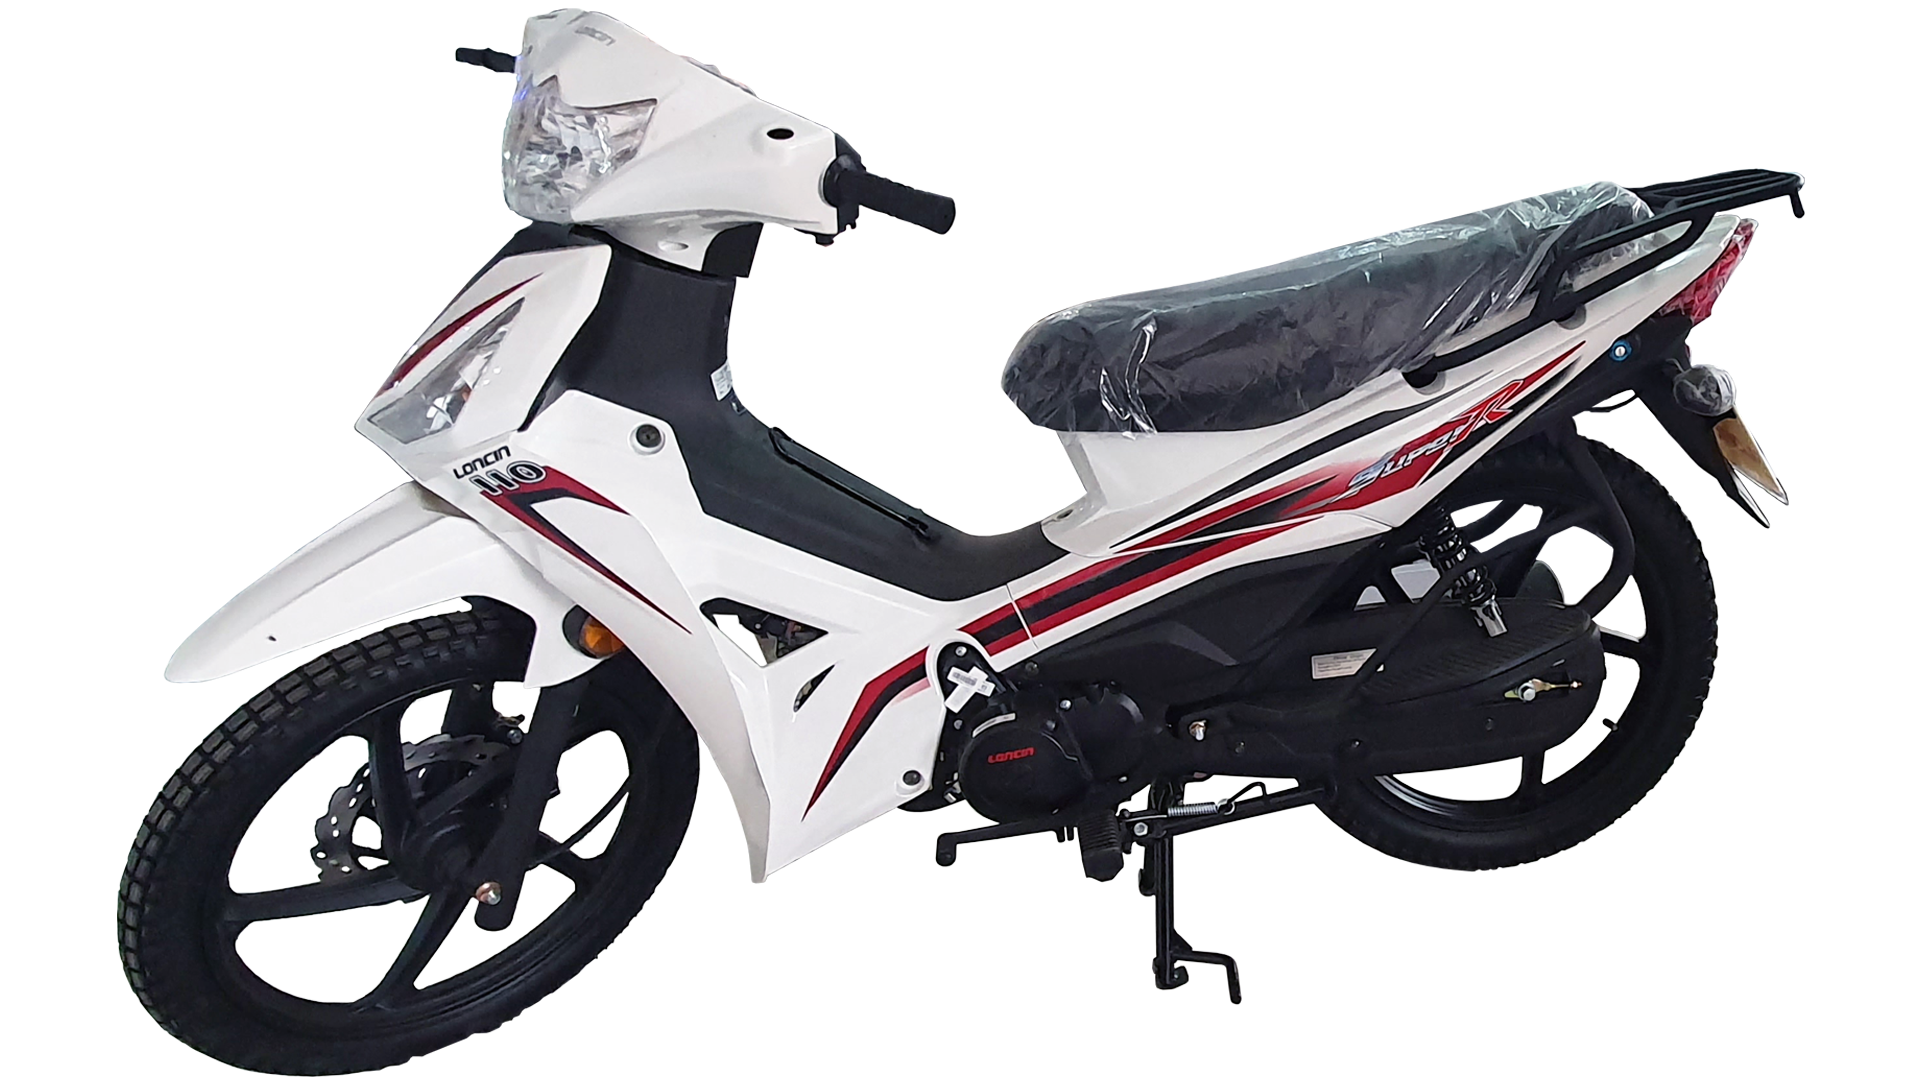 Motocycle LONCIN LX110-59 - 110cc - Electro Chaabani vente electromenager